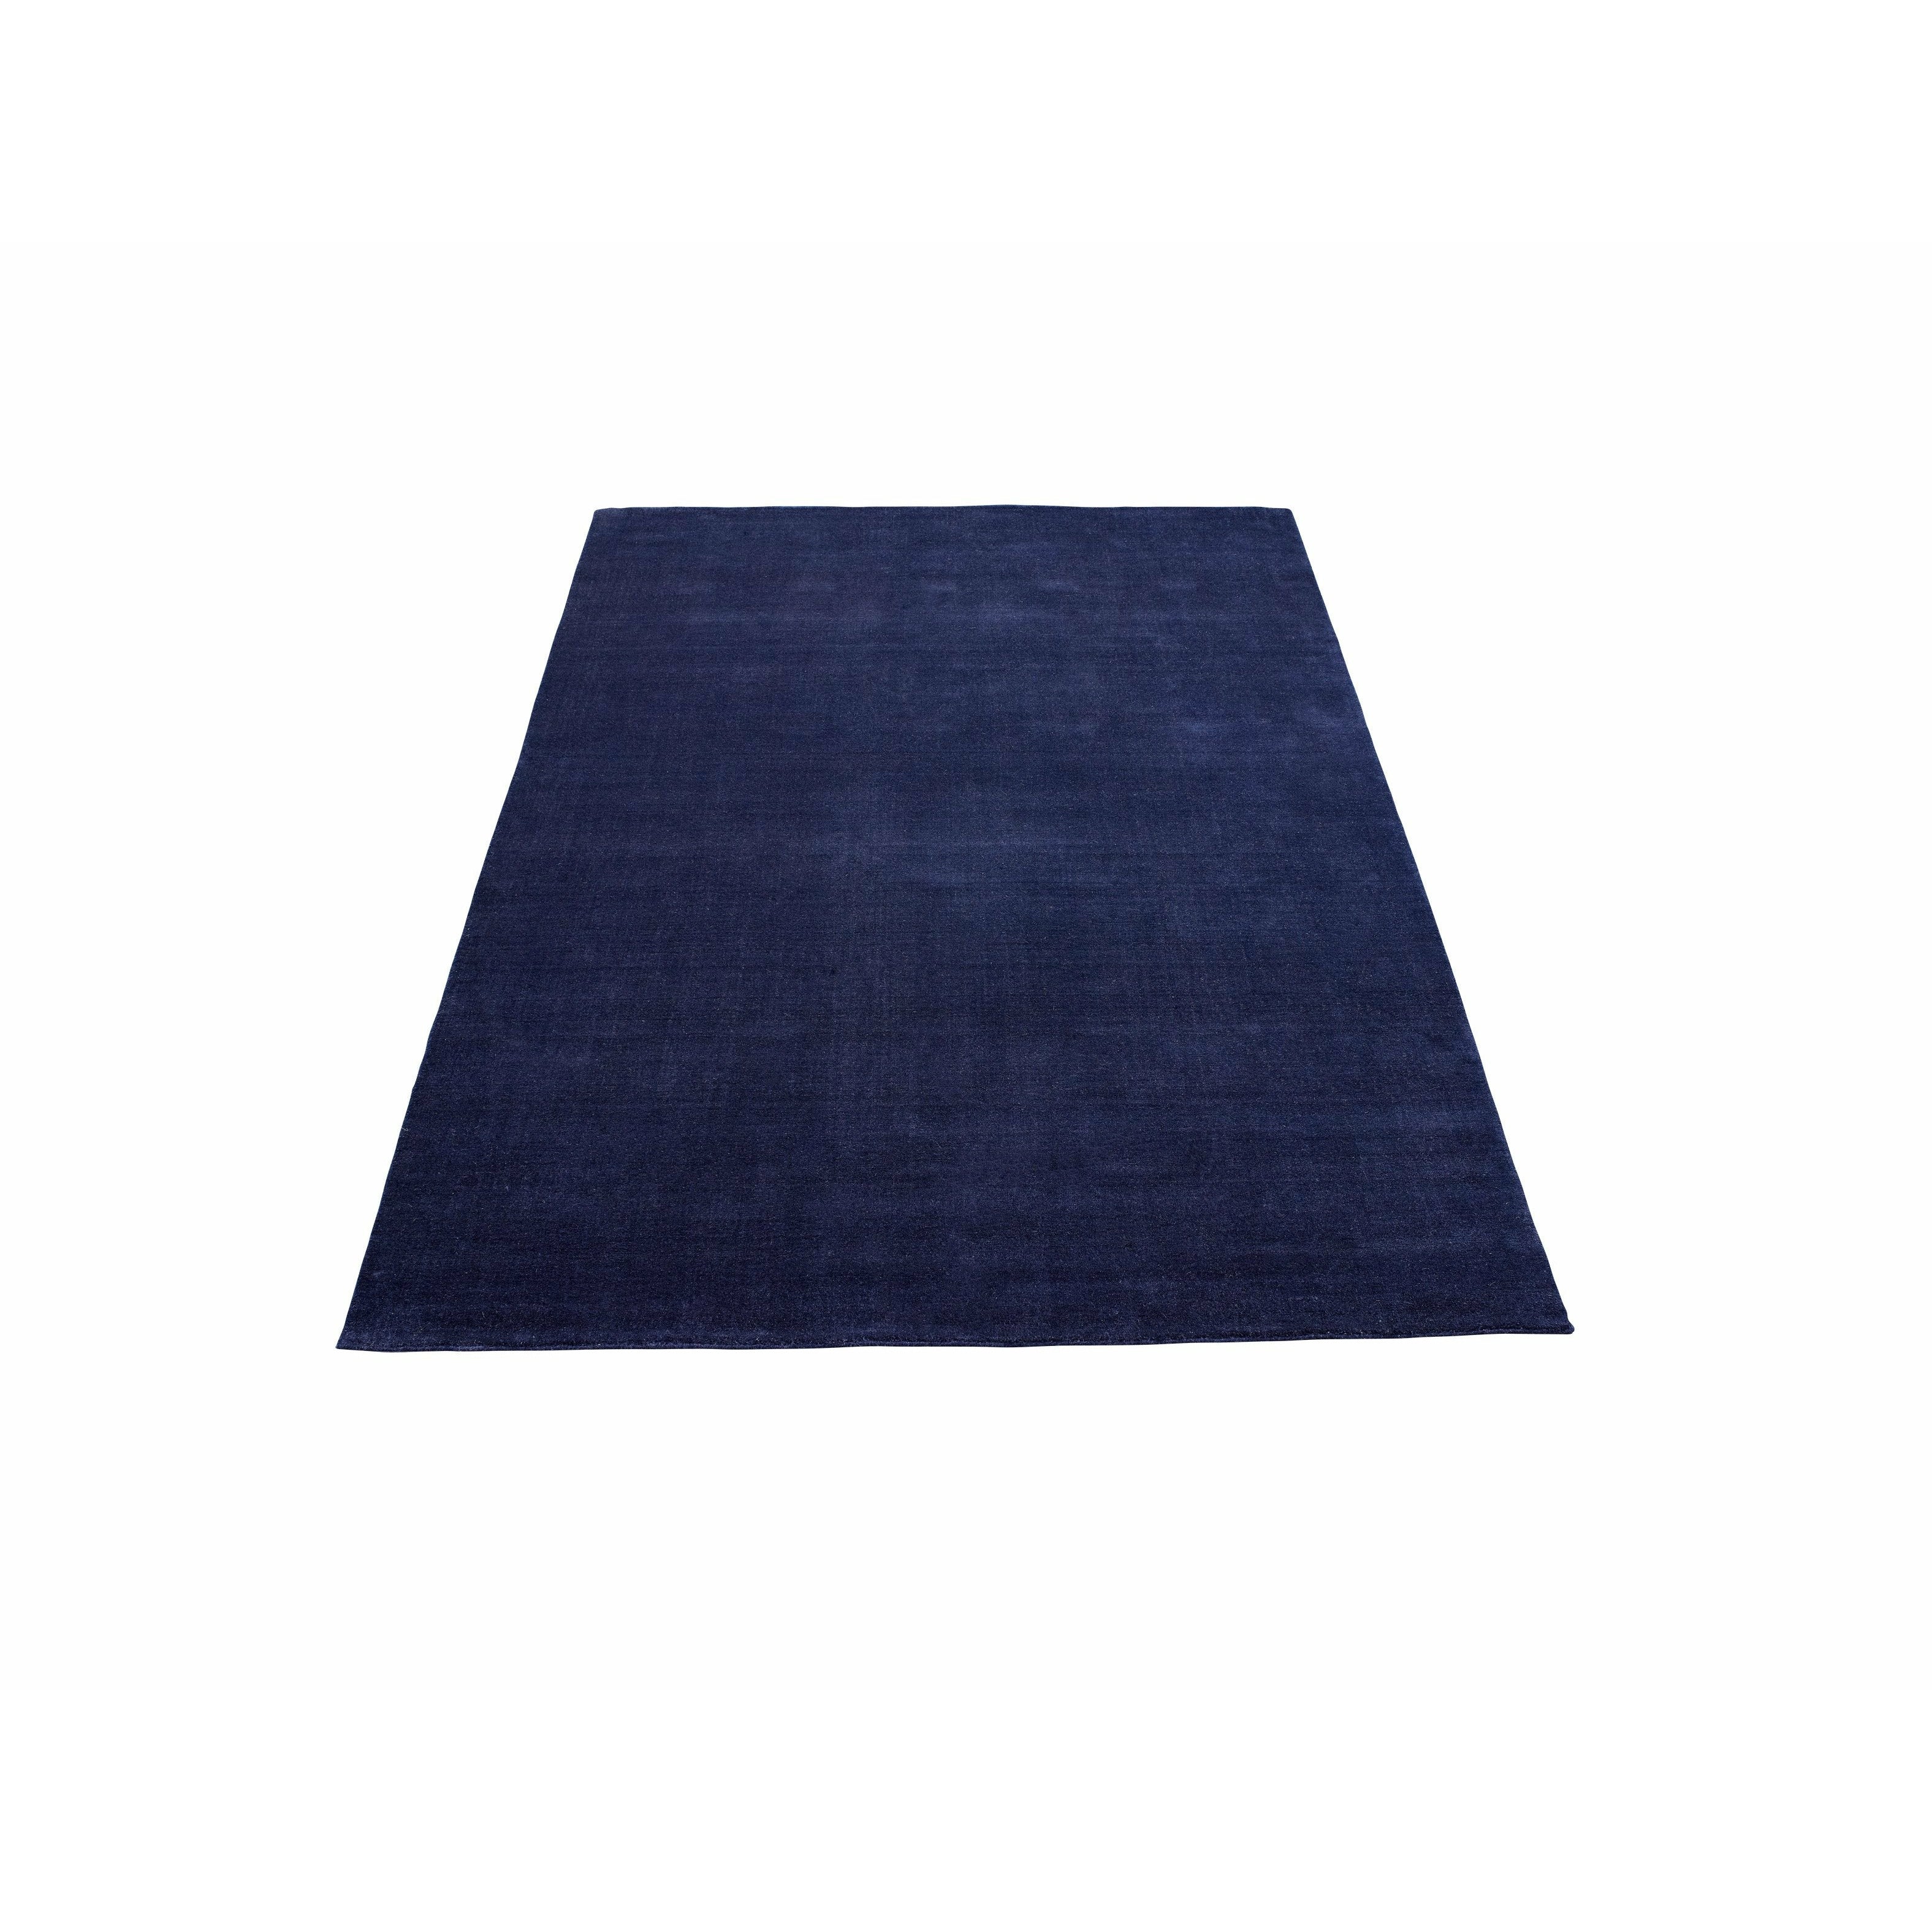 Massimo Earth Bamboo alfombra vibrante azul, 140x200 cm